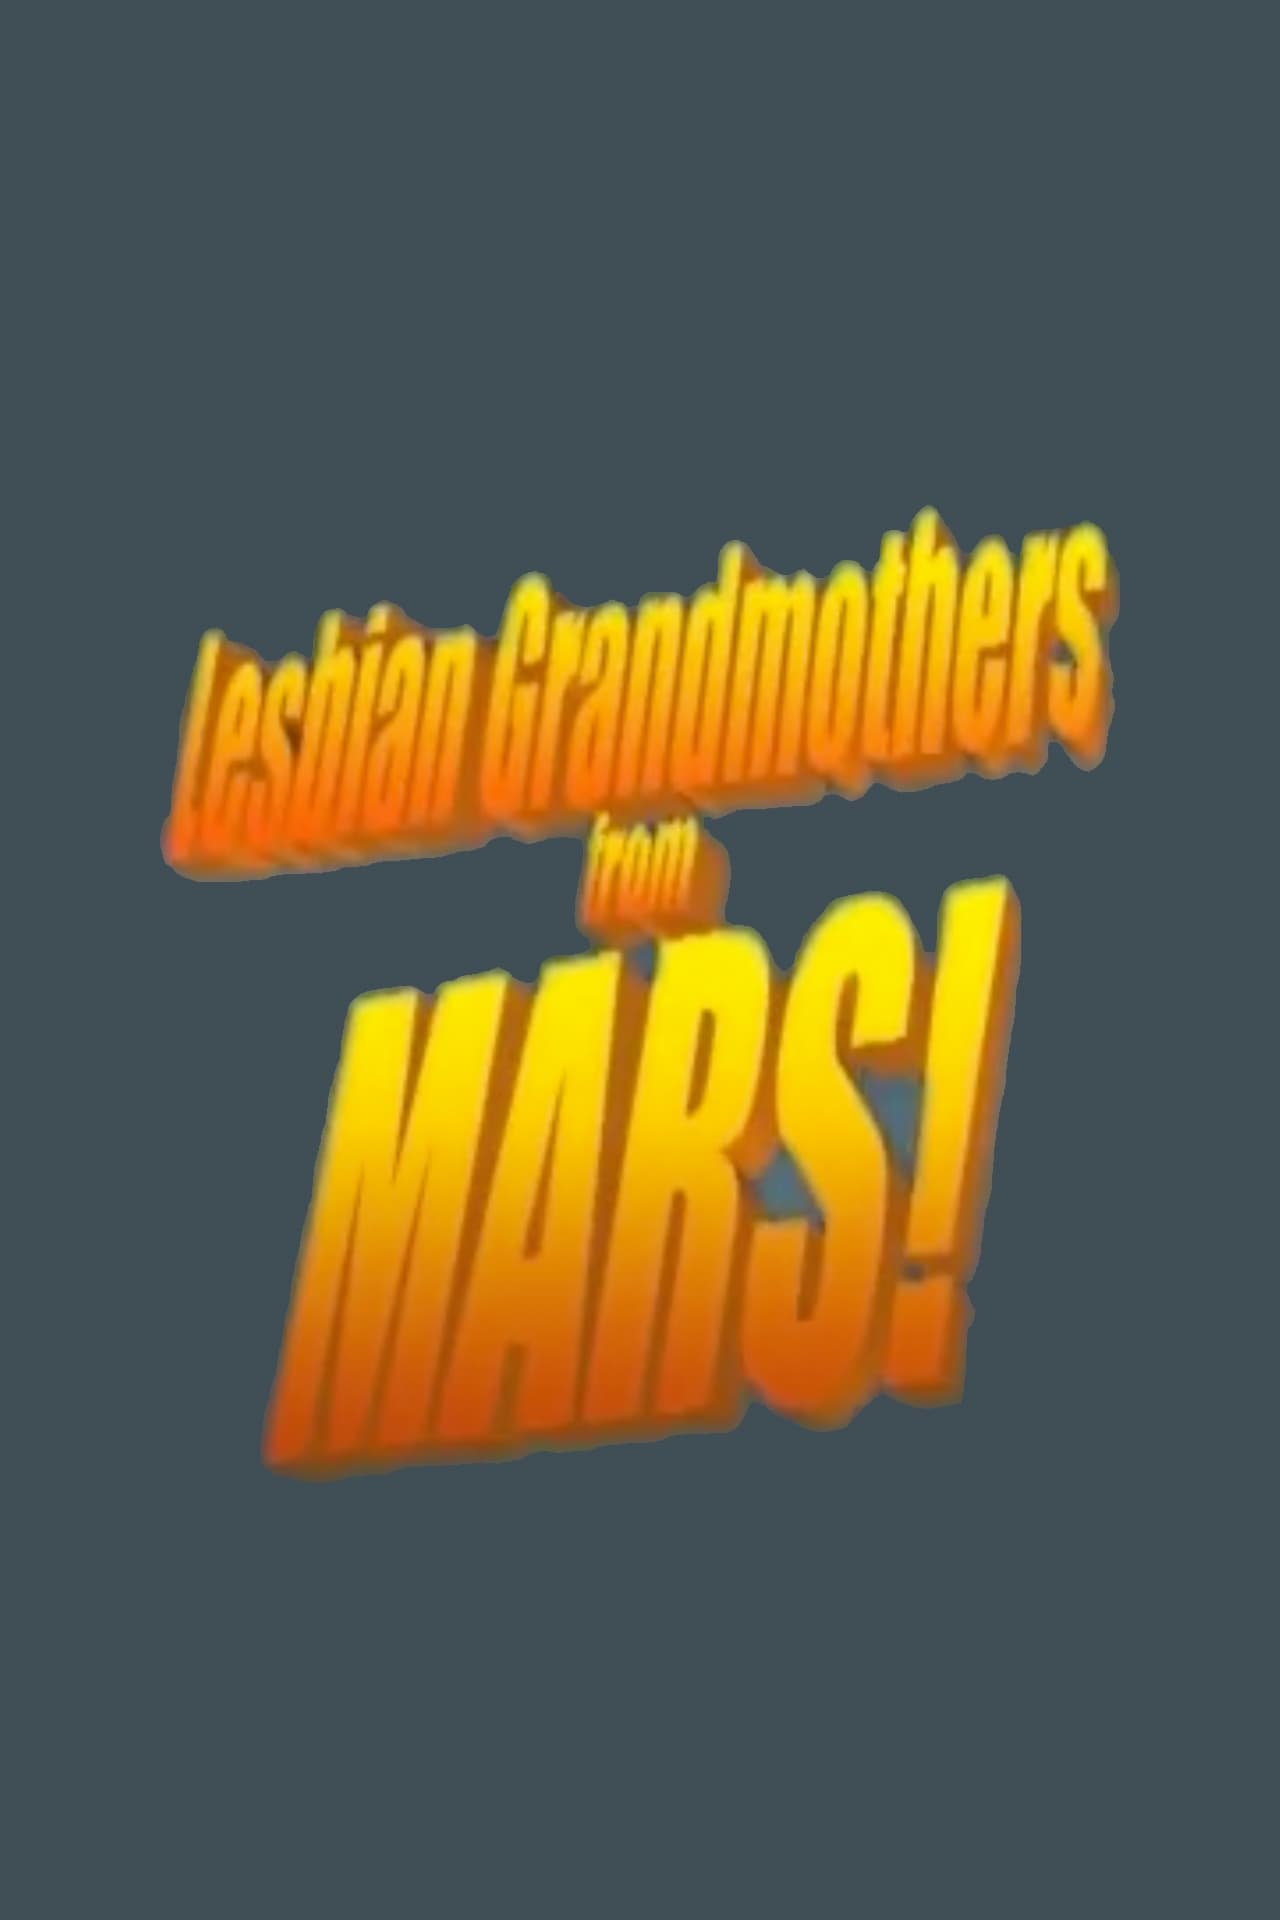 Lesbian Grandmothers from Mars